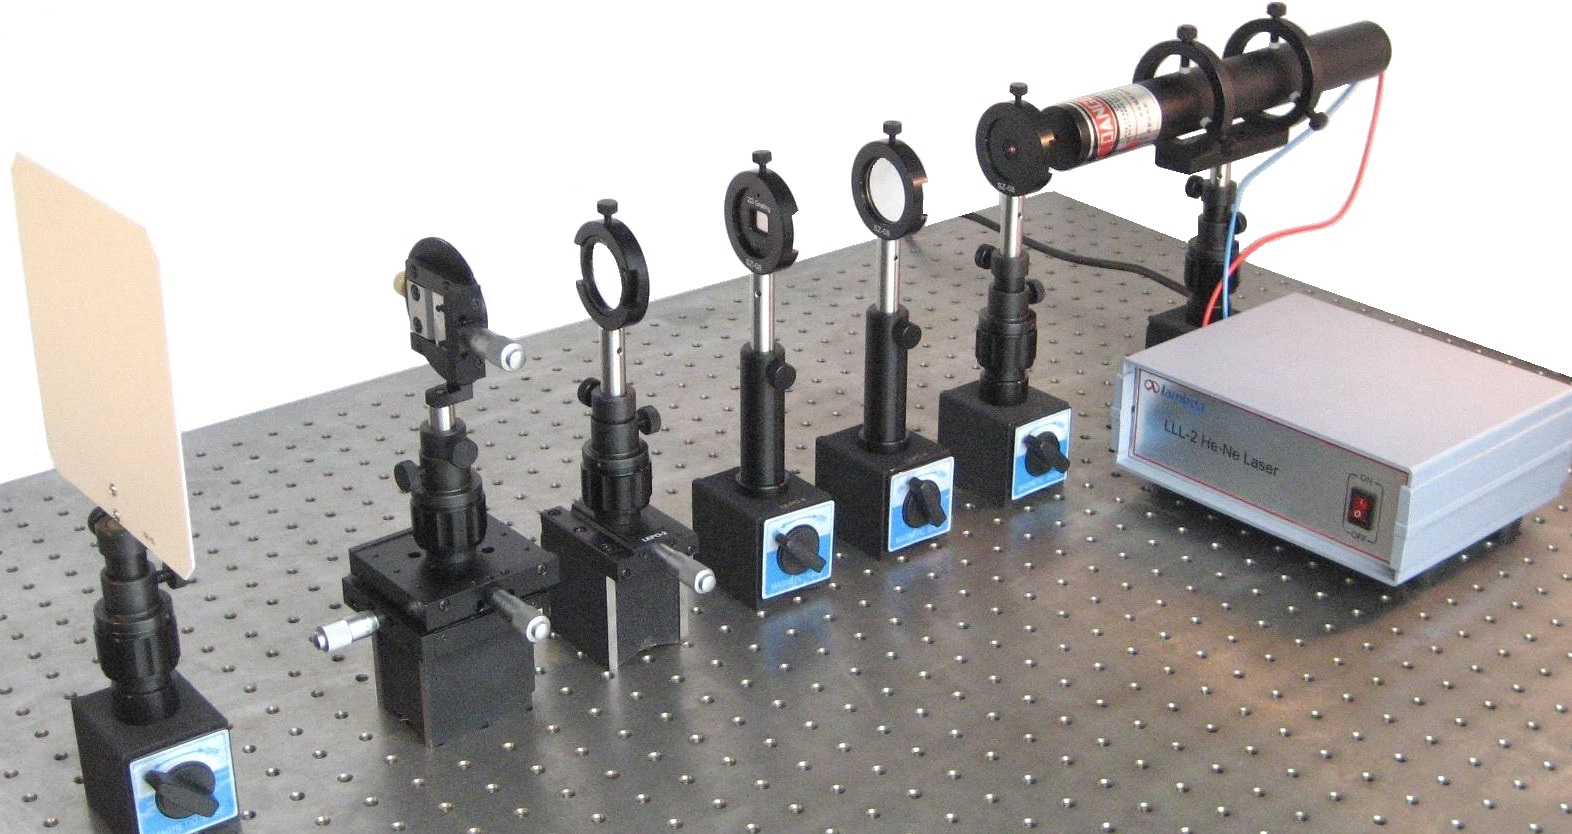 LEOK-43 Information Optics Experiment Kit